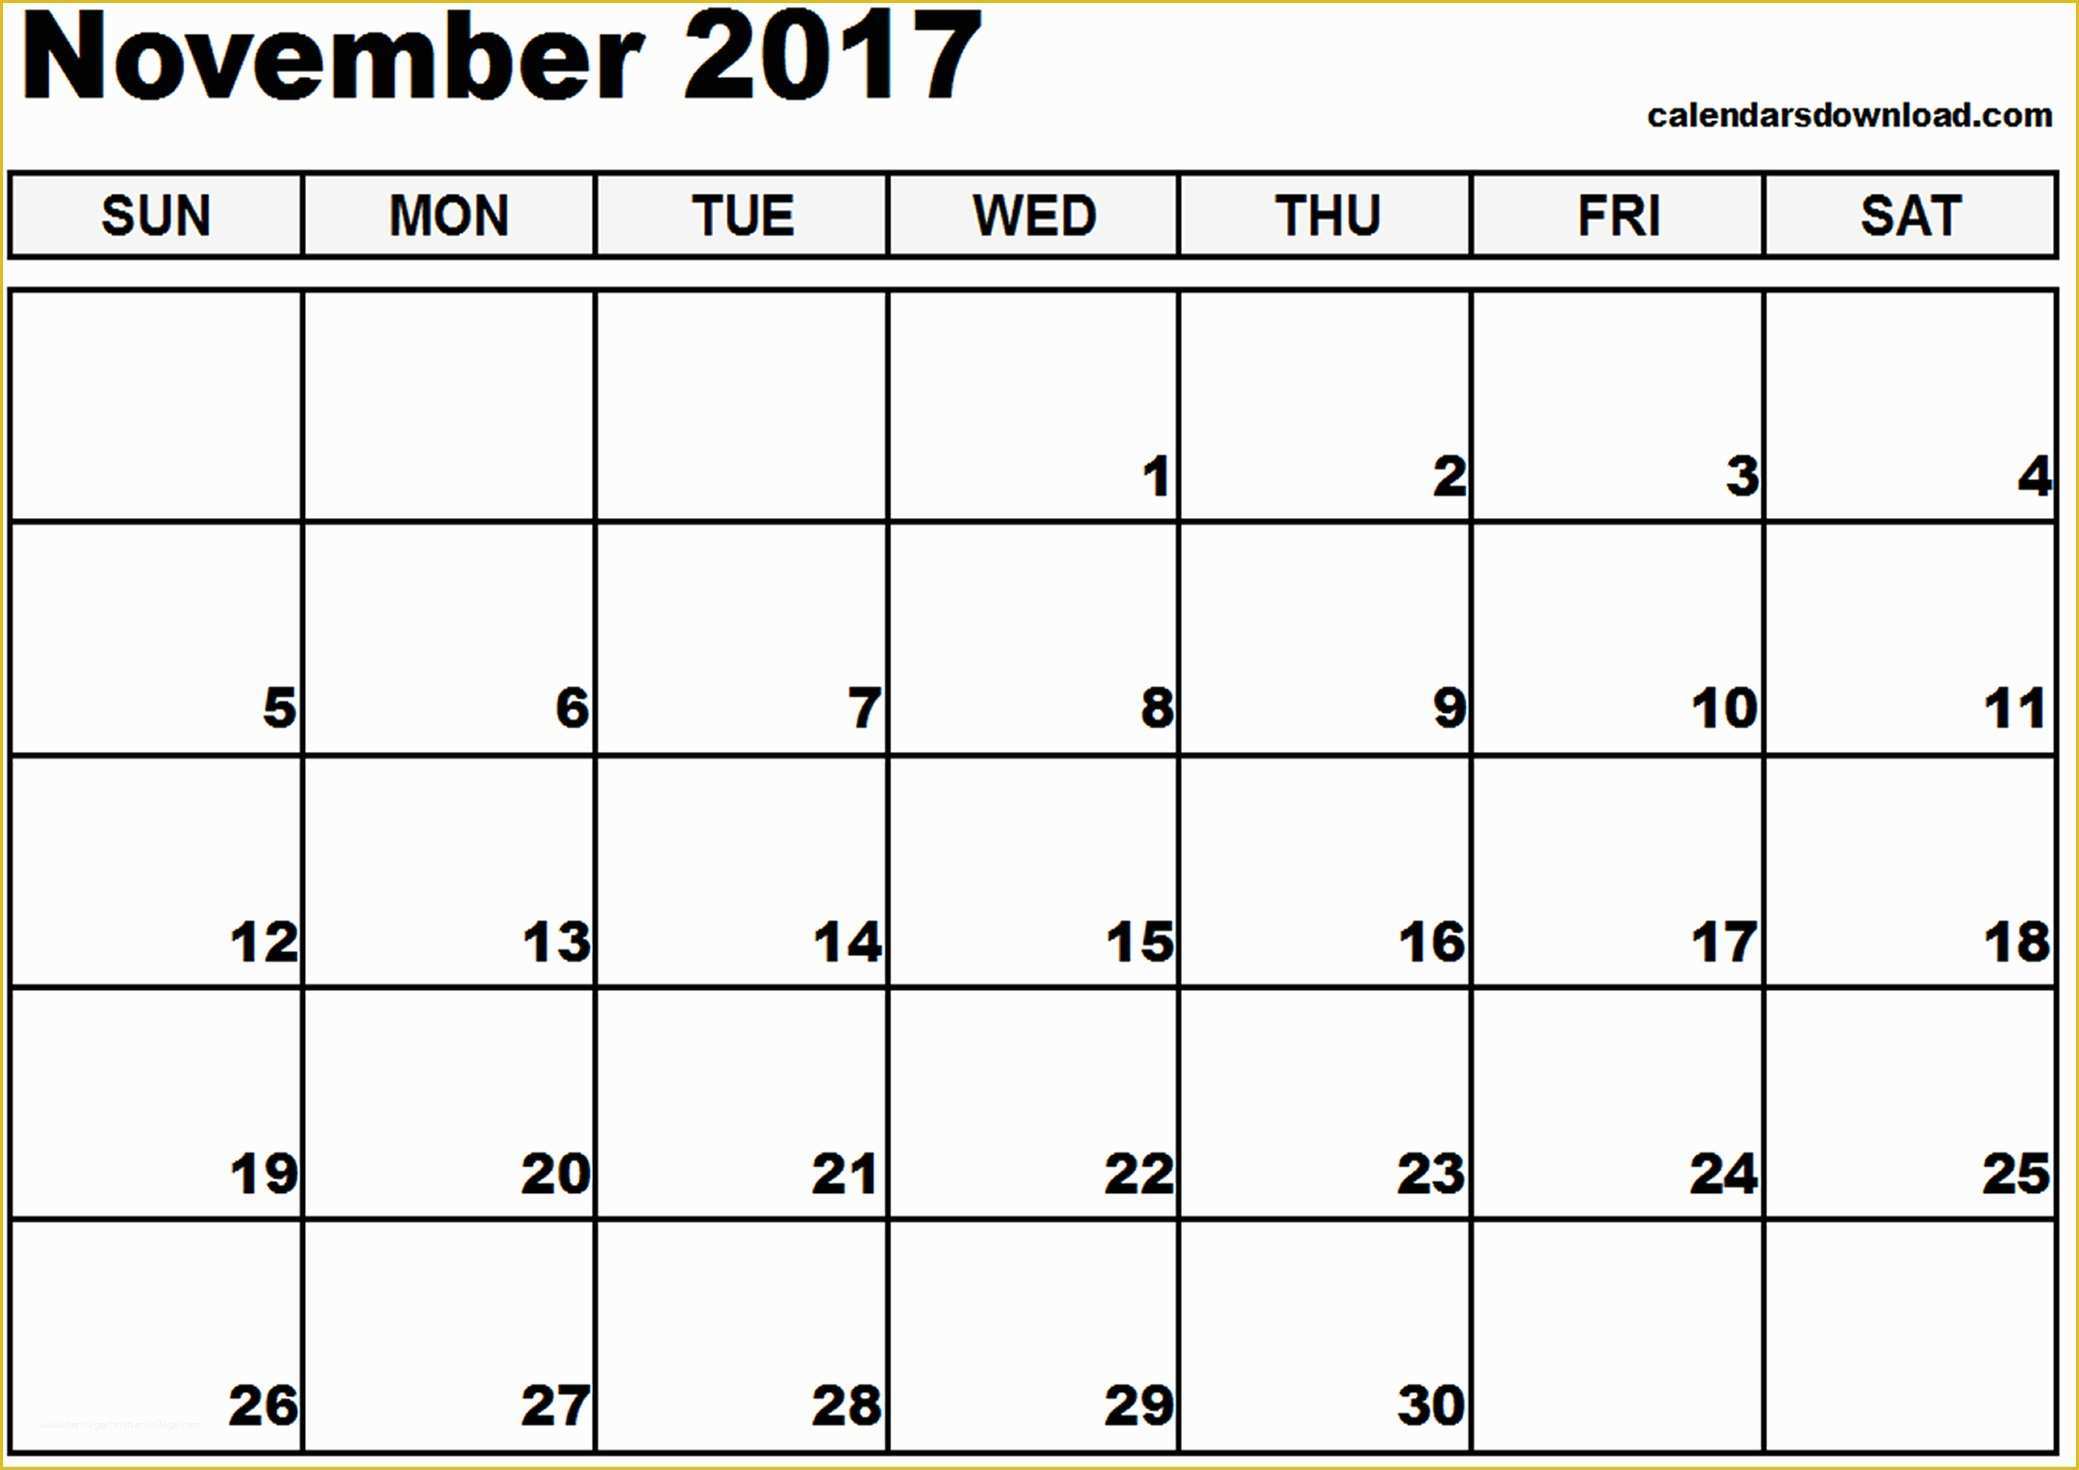 free-calendar-template-2017-november-of-november-2017-calendar-excel